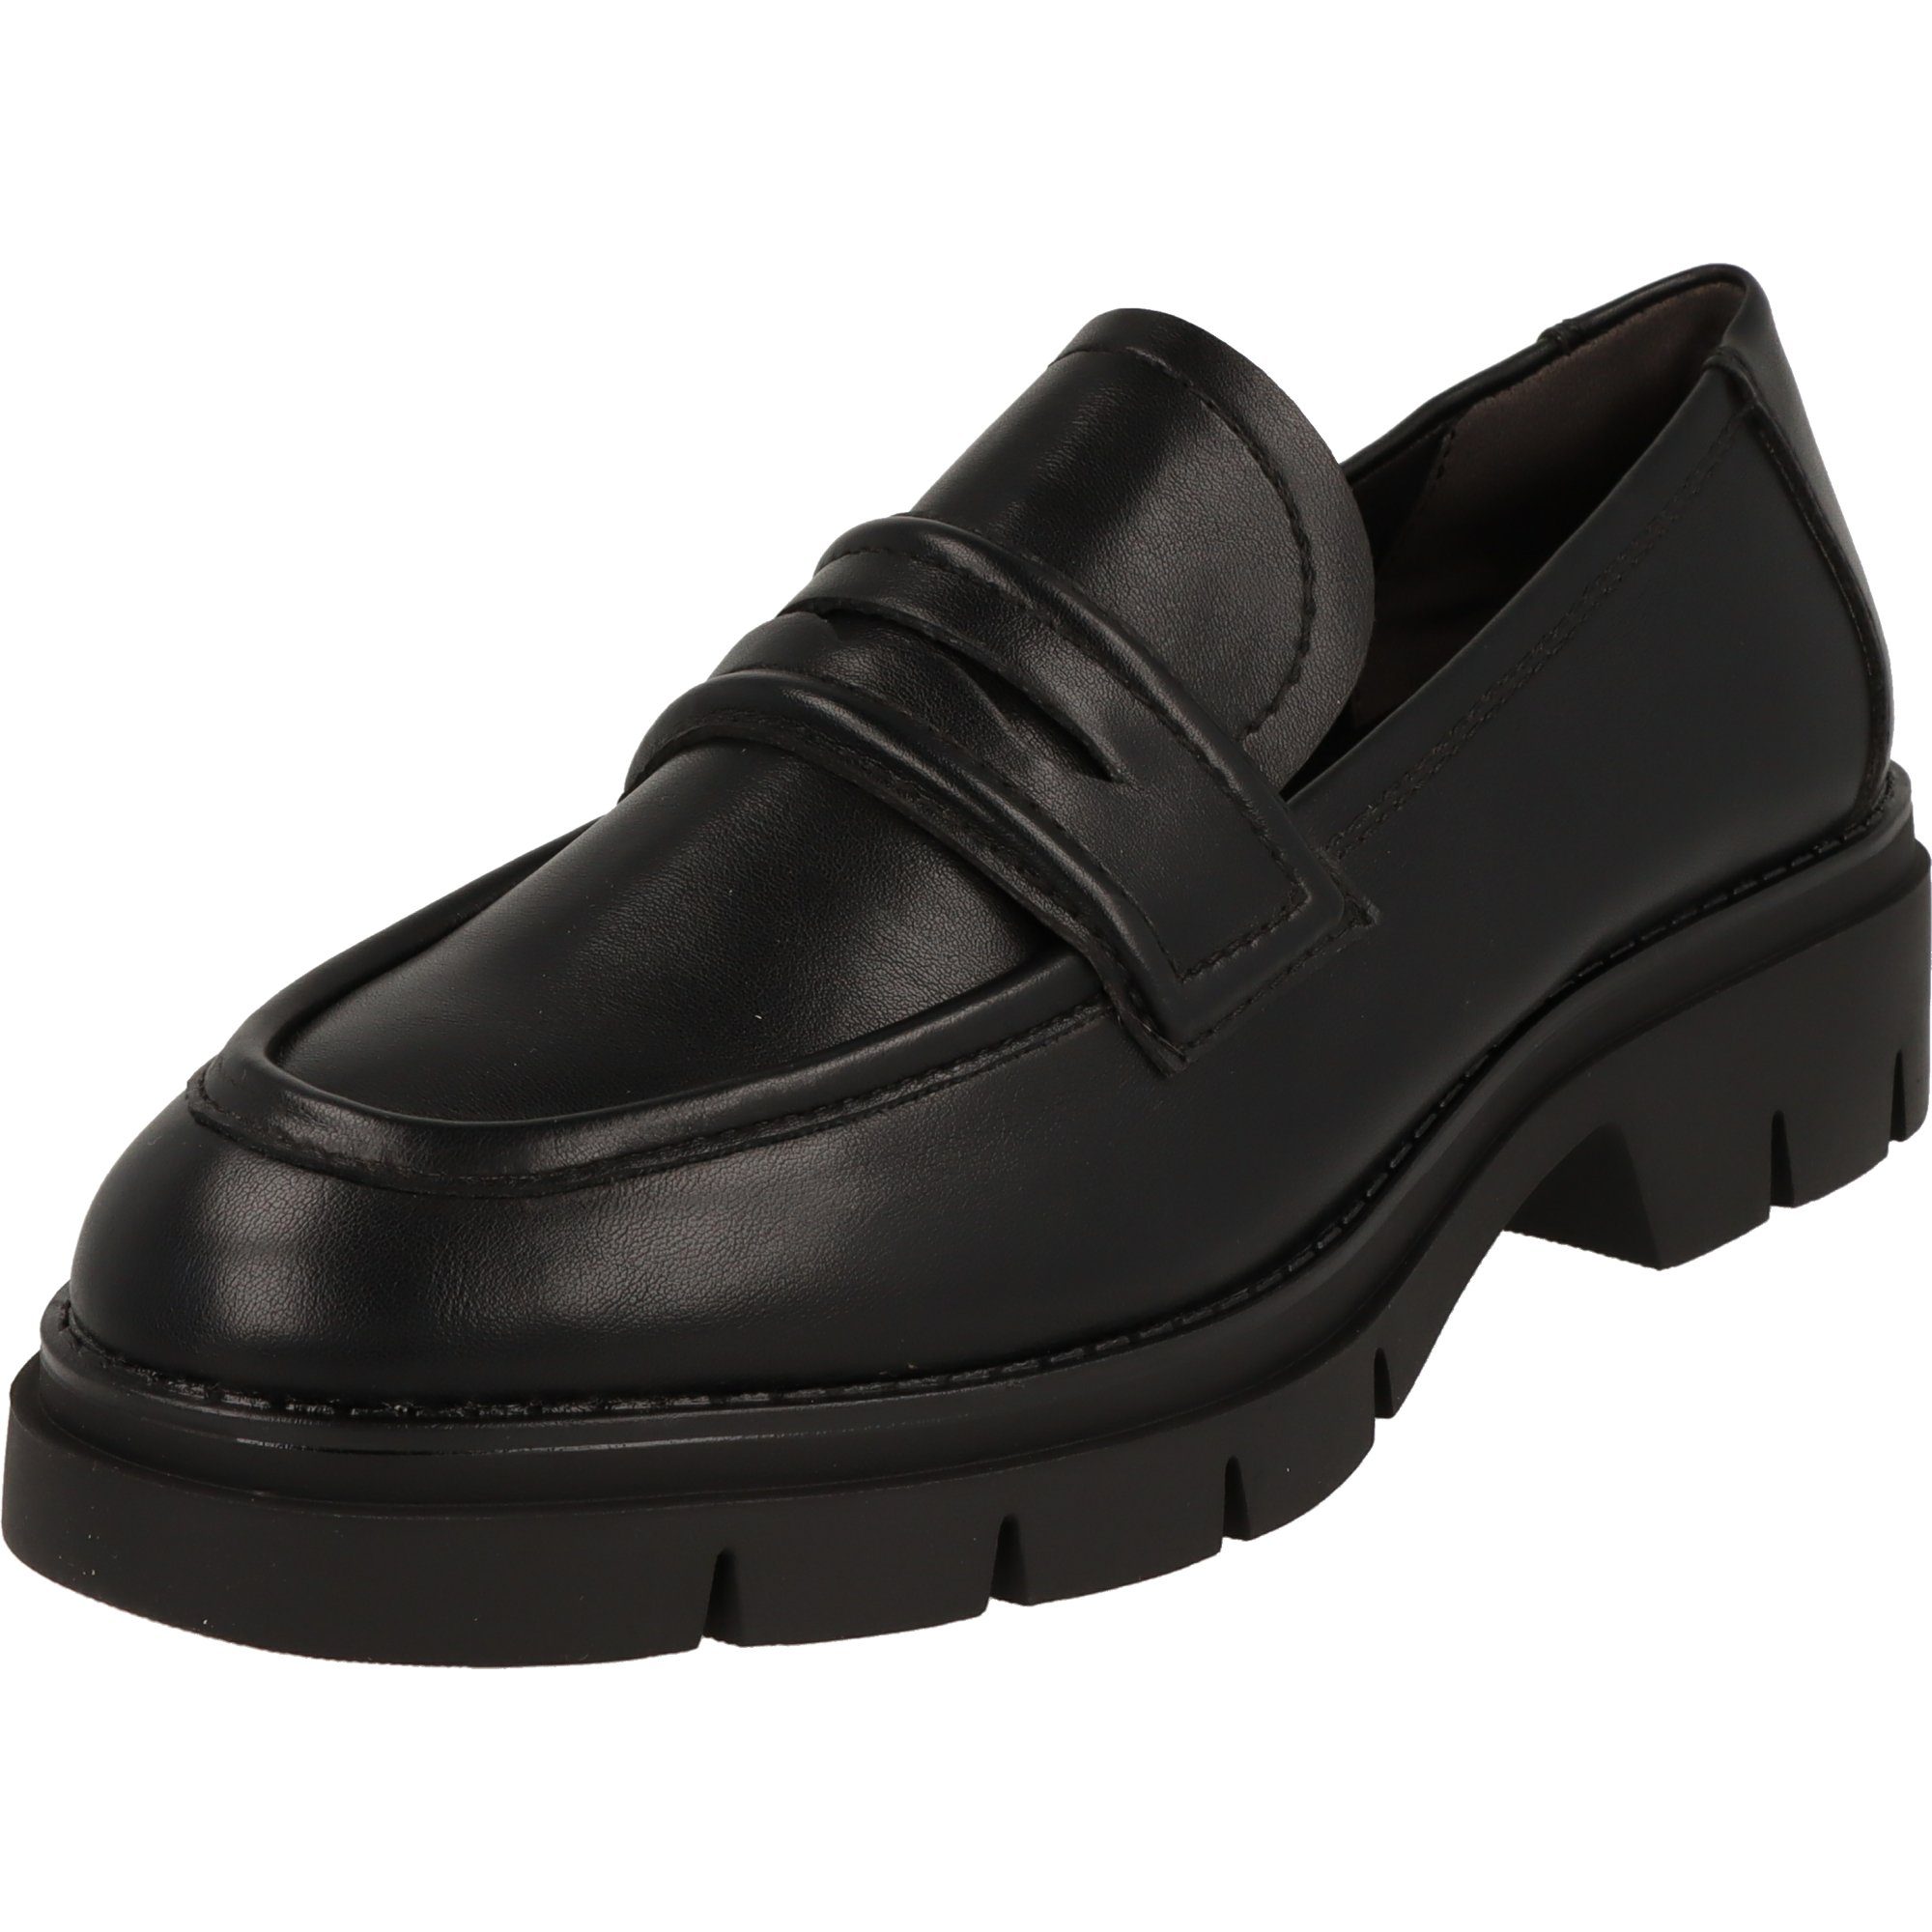 Tamaris Damen Schuhe Black Matt 1-24313-41 Halbschuhe Loafer Slipper Komfort Vegan